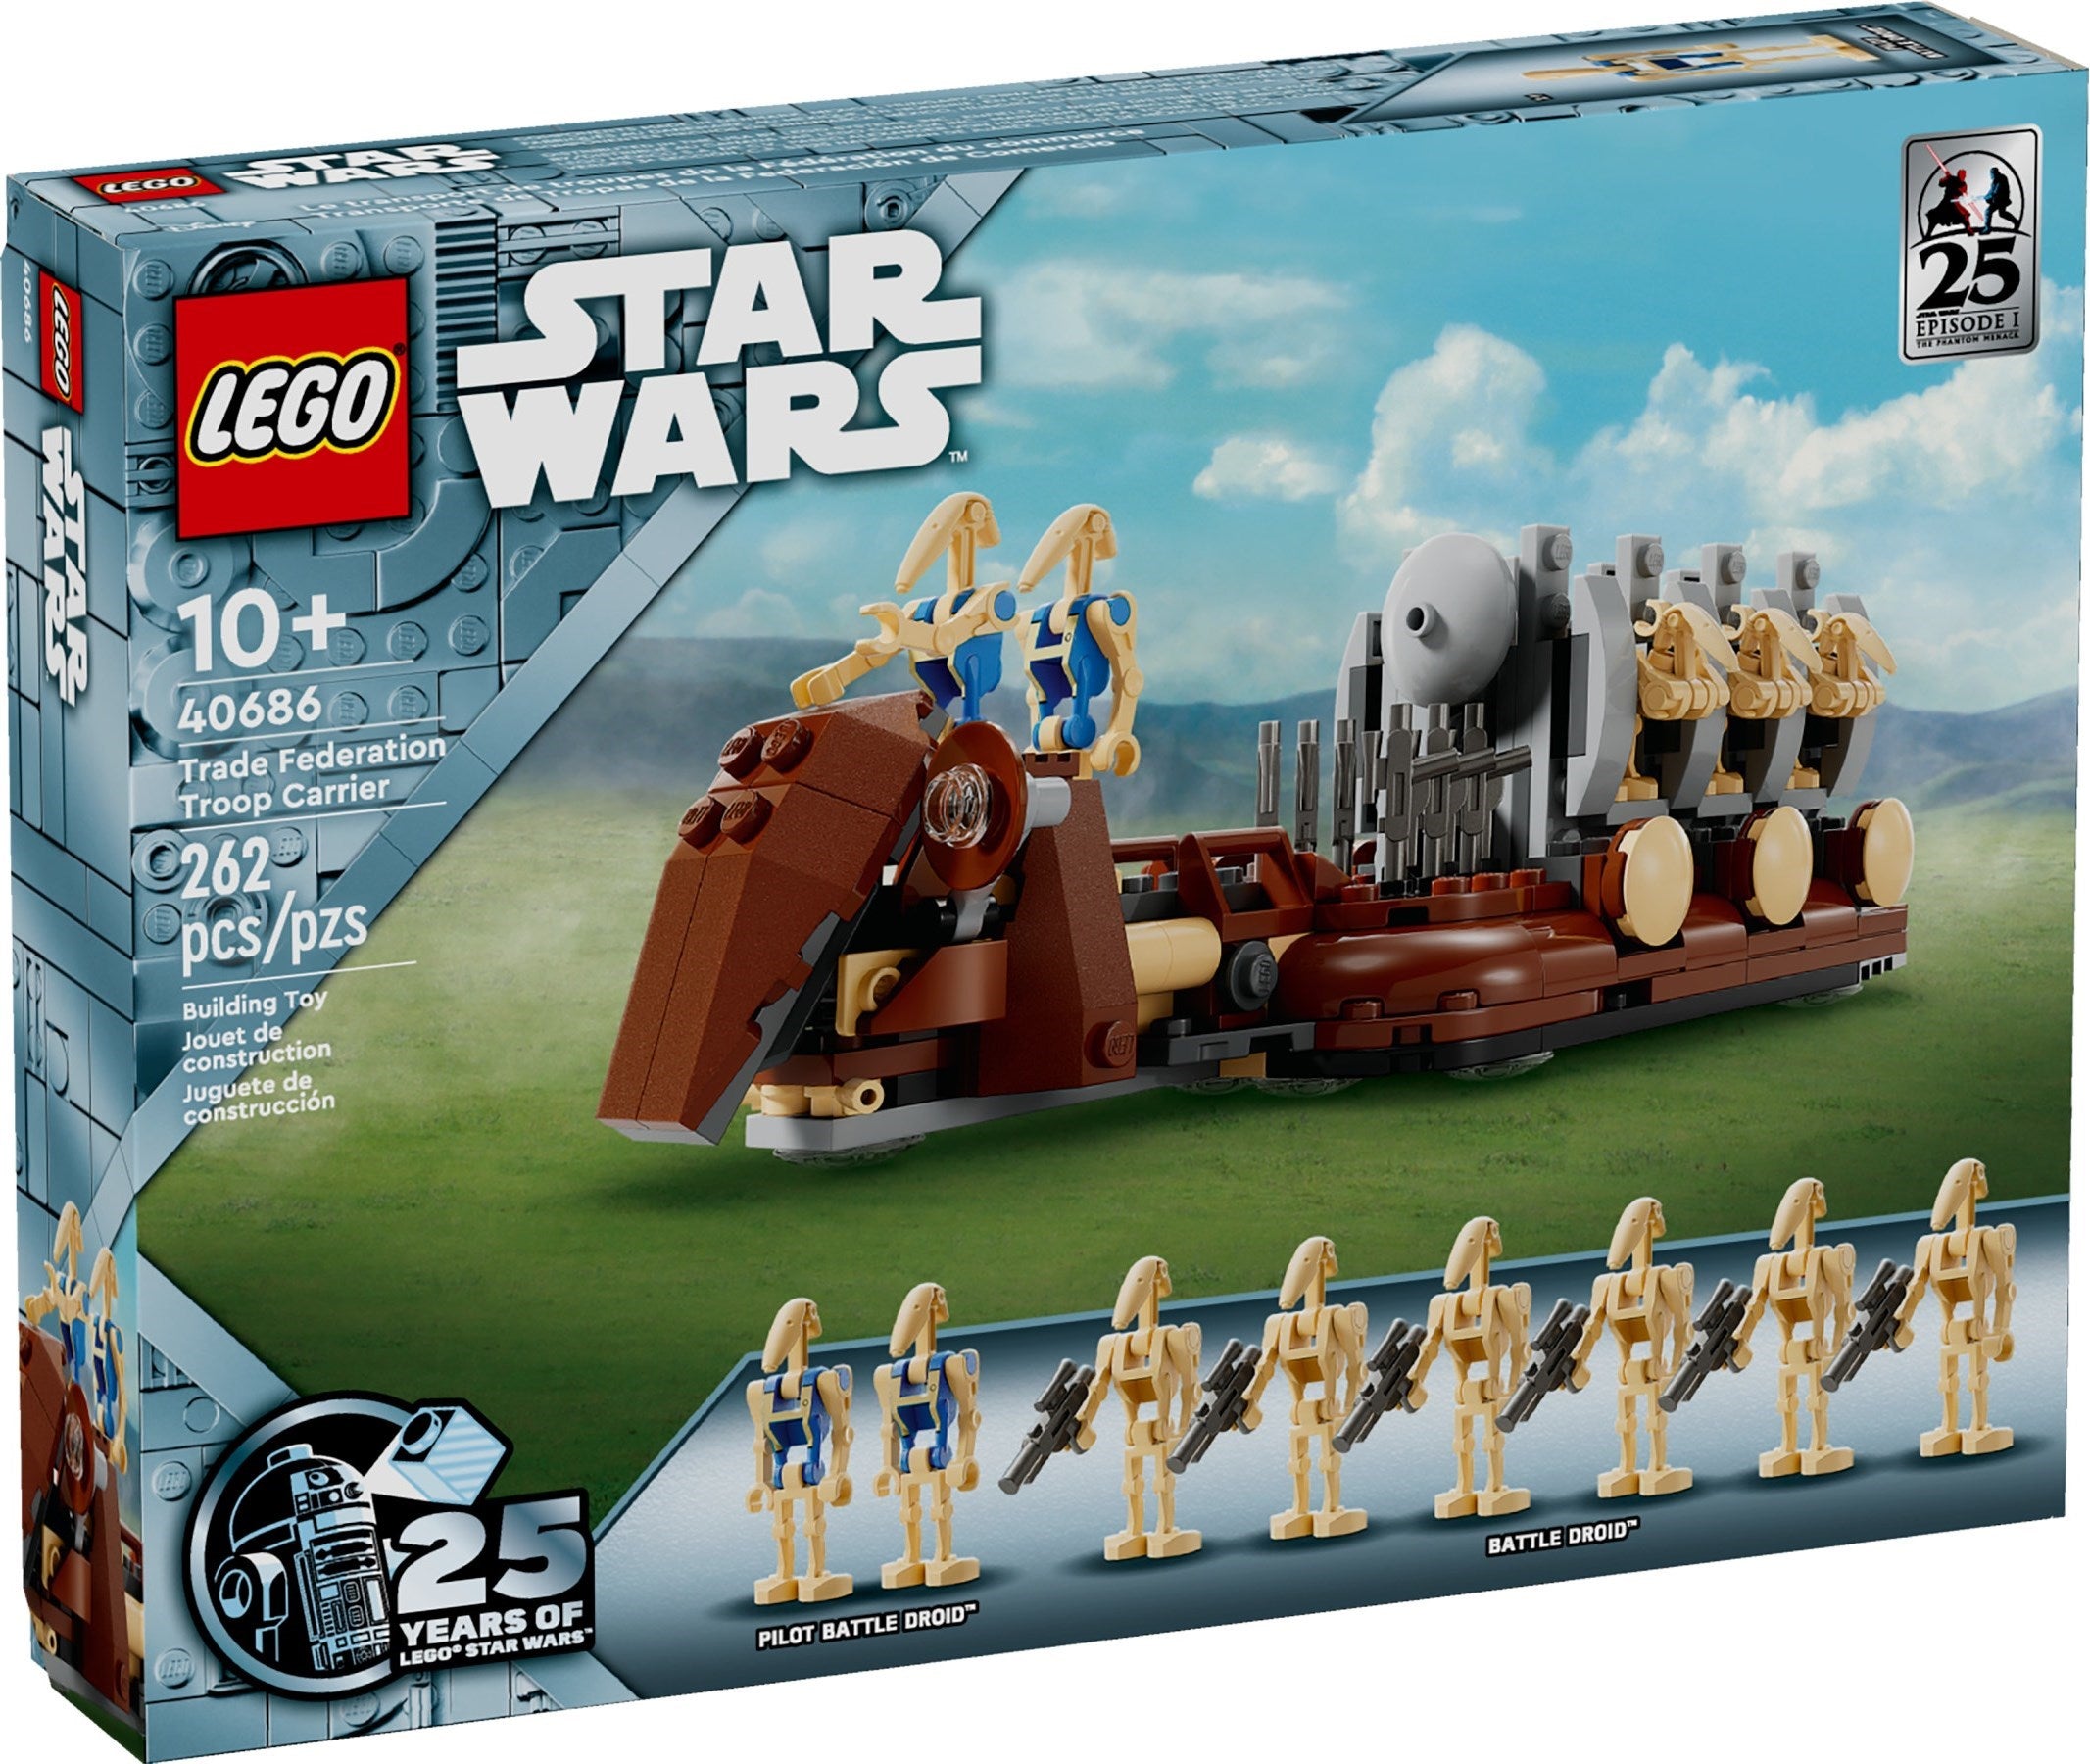 Lego Star Wars 40686 - Trade Federation Troop Carrier